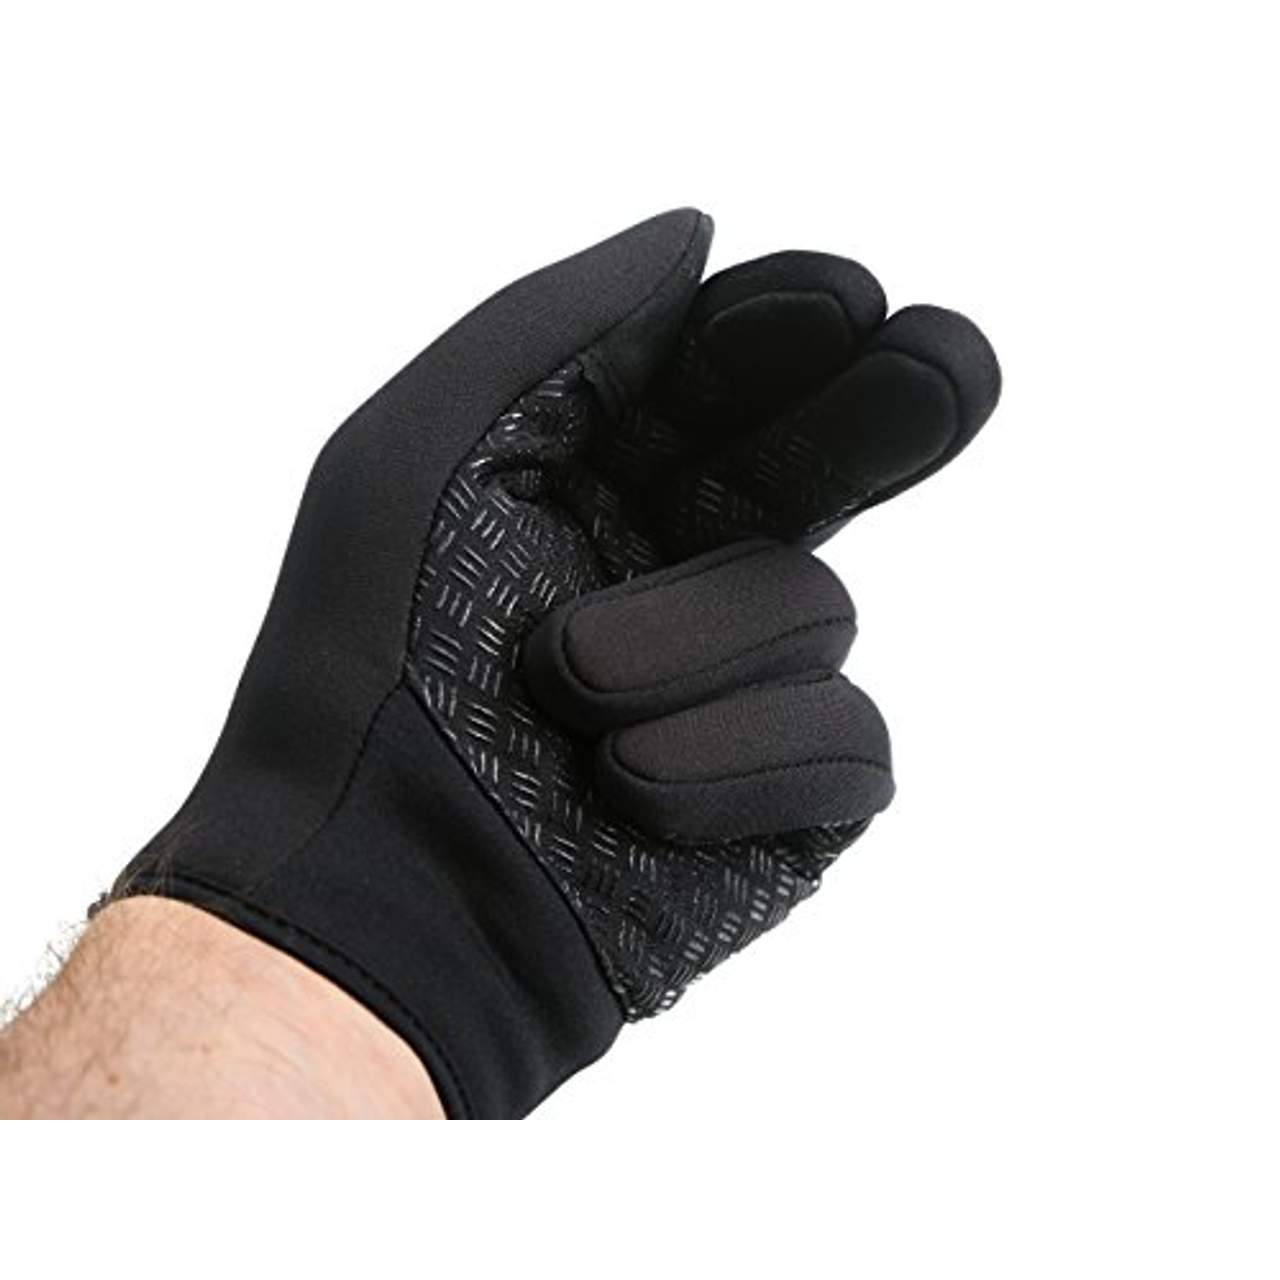 Nordic Walking Handschuhe Damen schwarz Elasto Training